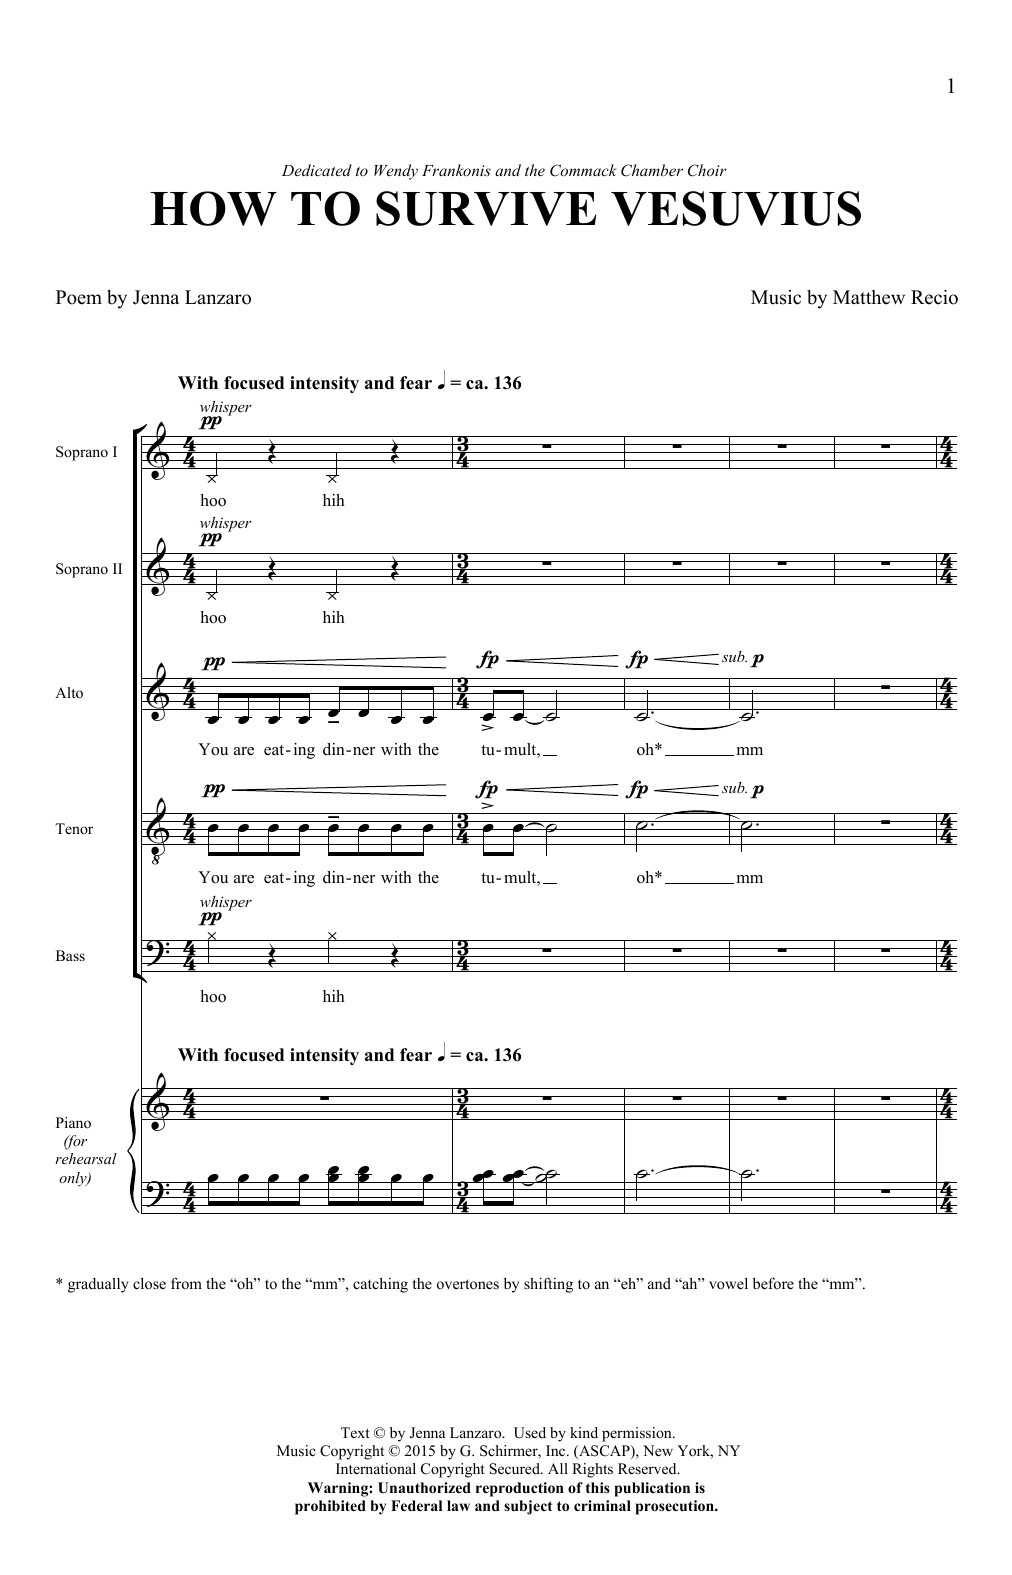 Matthew Recio & Jenna Lanzaro How To Survive Vesuvius Sheet Music Notes & Chords for SATB Choir - Download or Print PDF